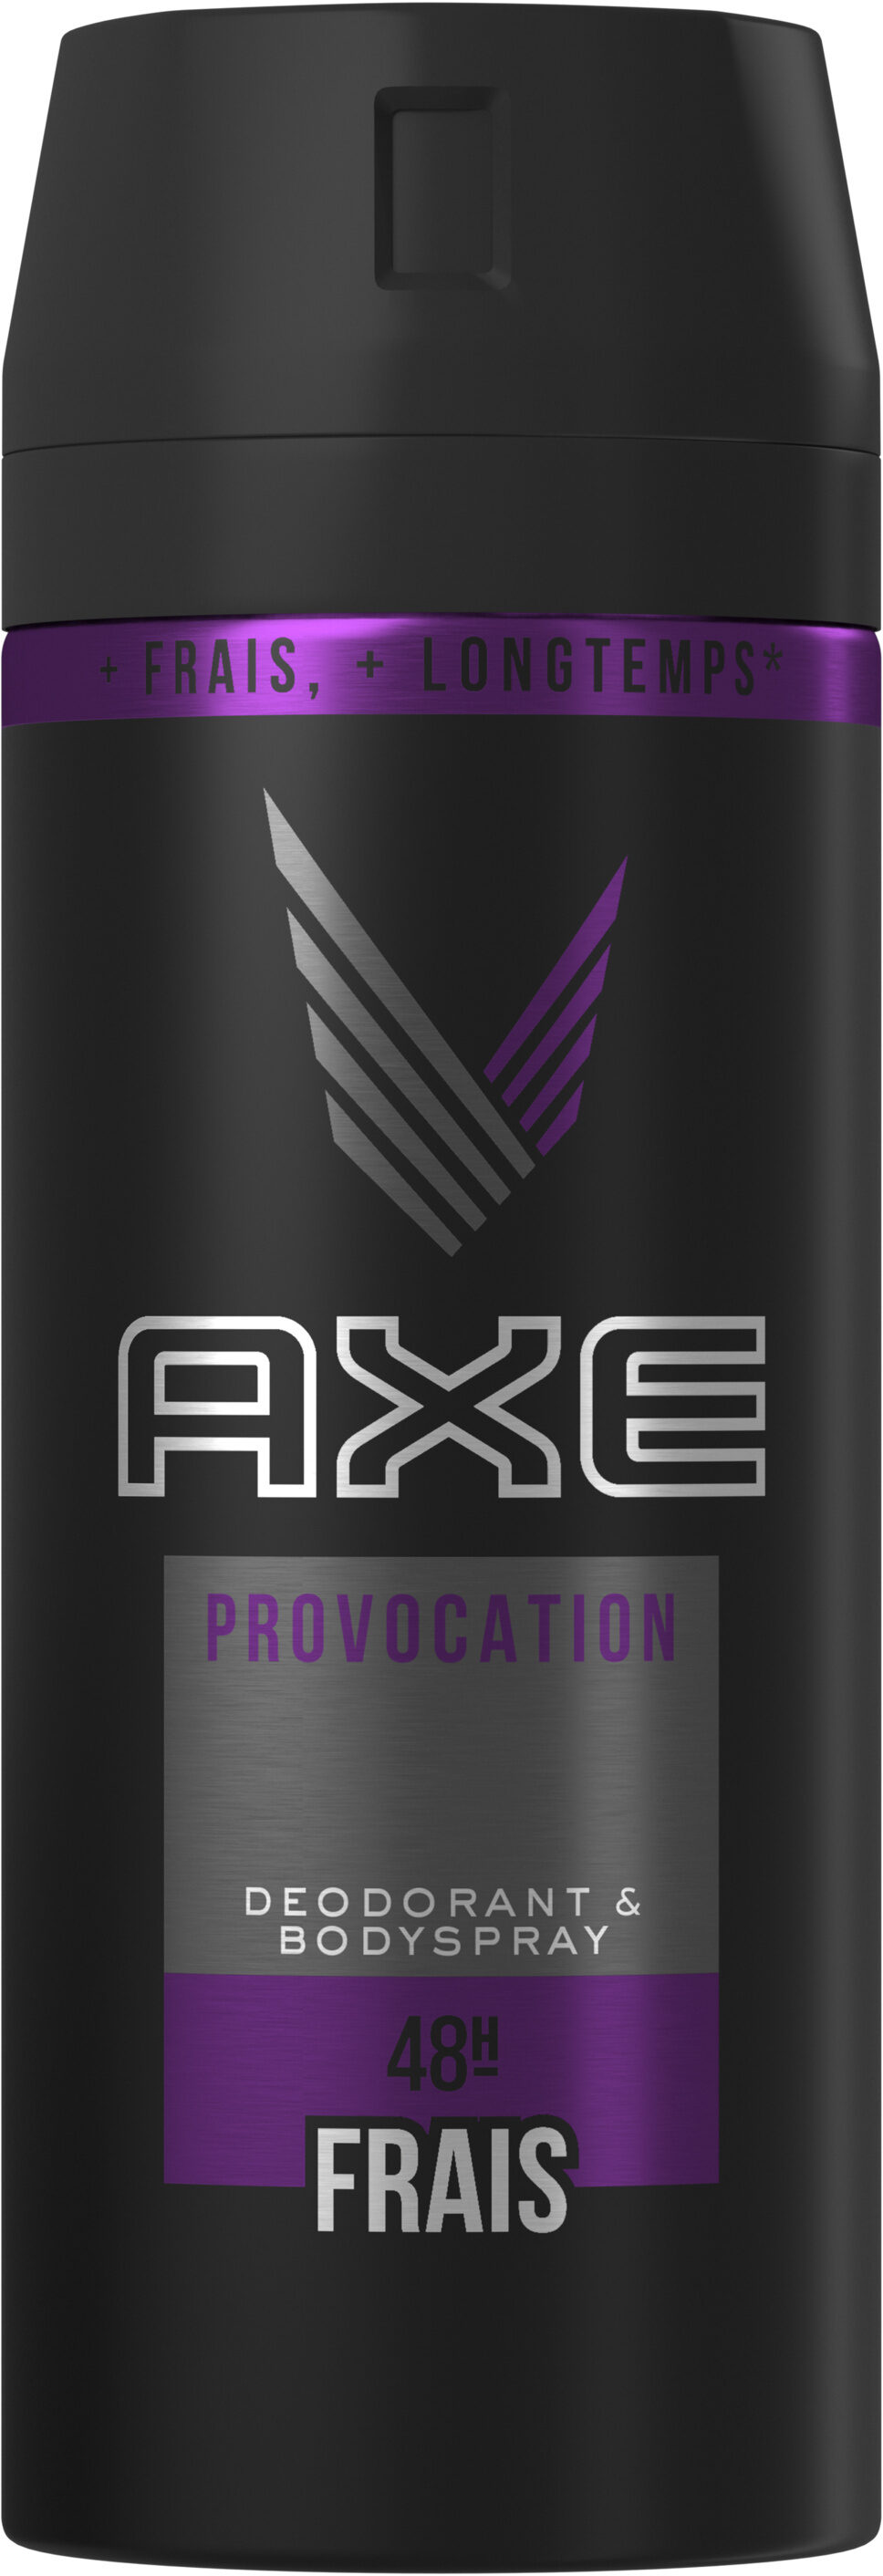 Axe Déodorant Bodyspray Homme Provocation 48h Non-Stop Frais 150ml - Продукт - fr